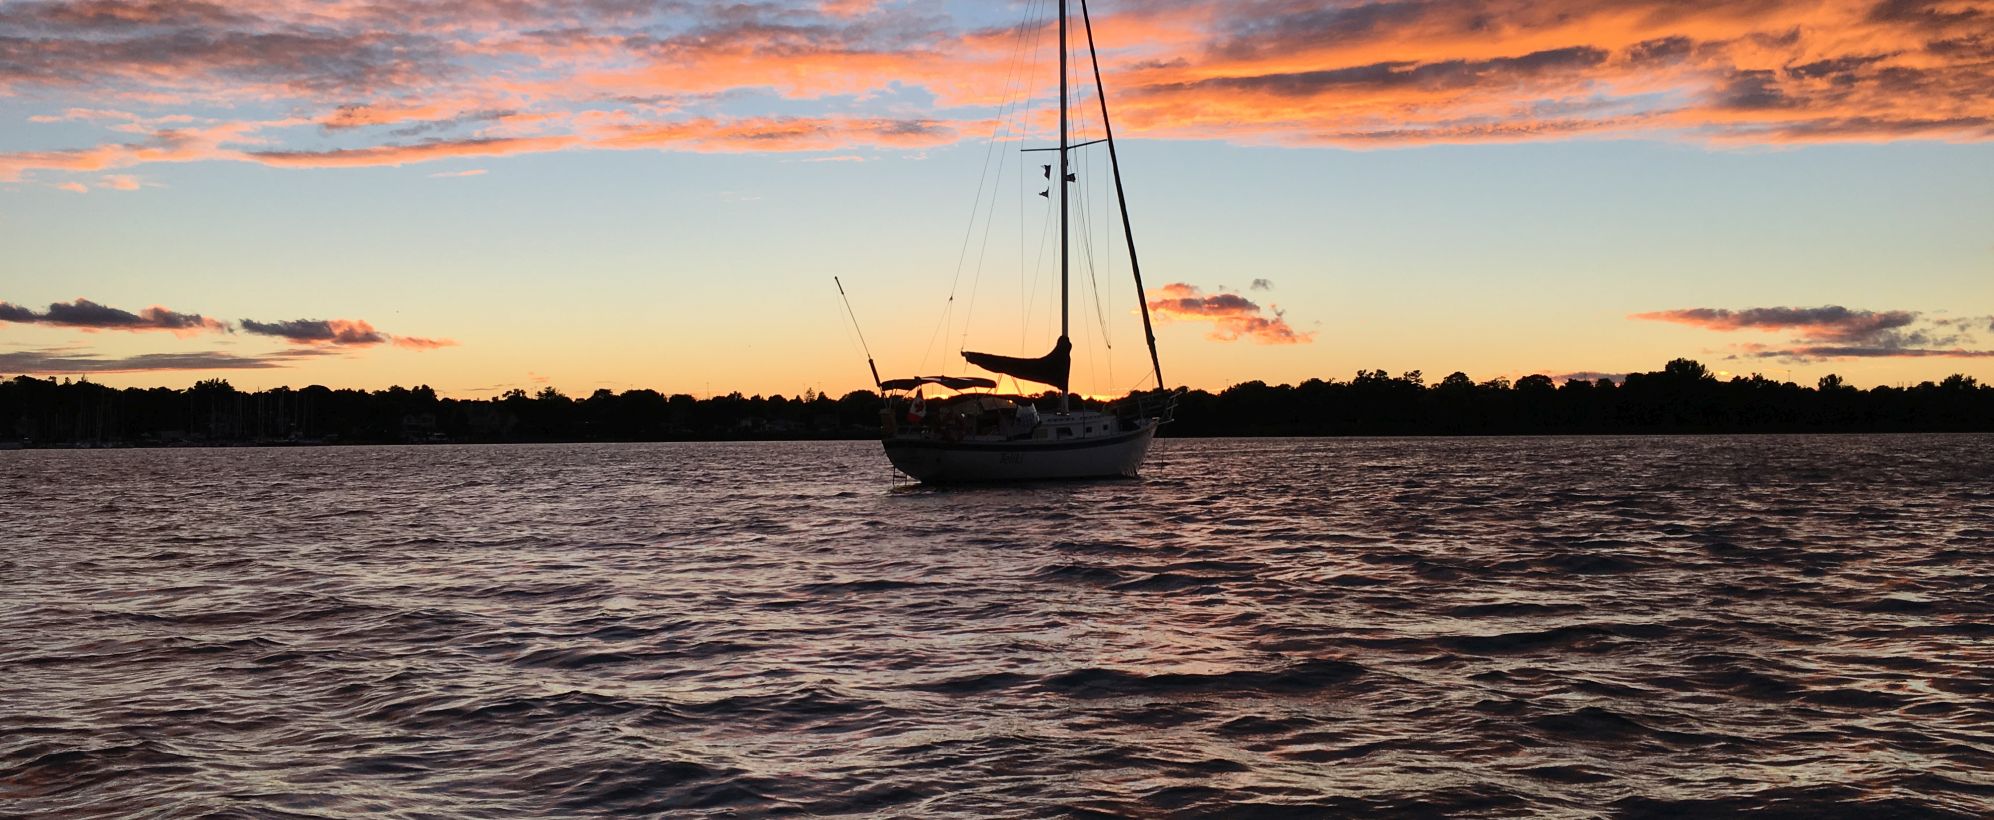 aloha 27 sailboat review